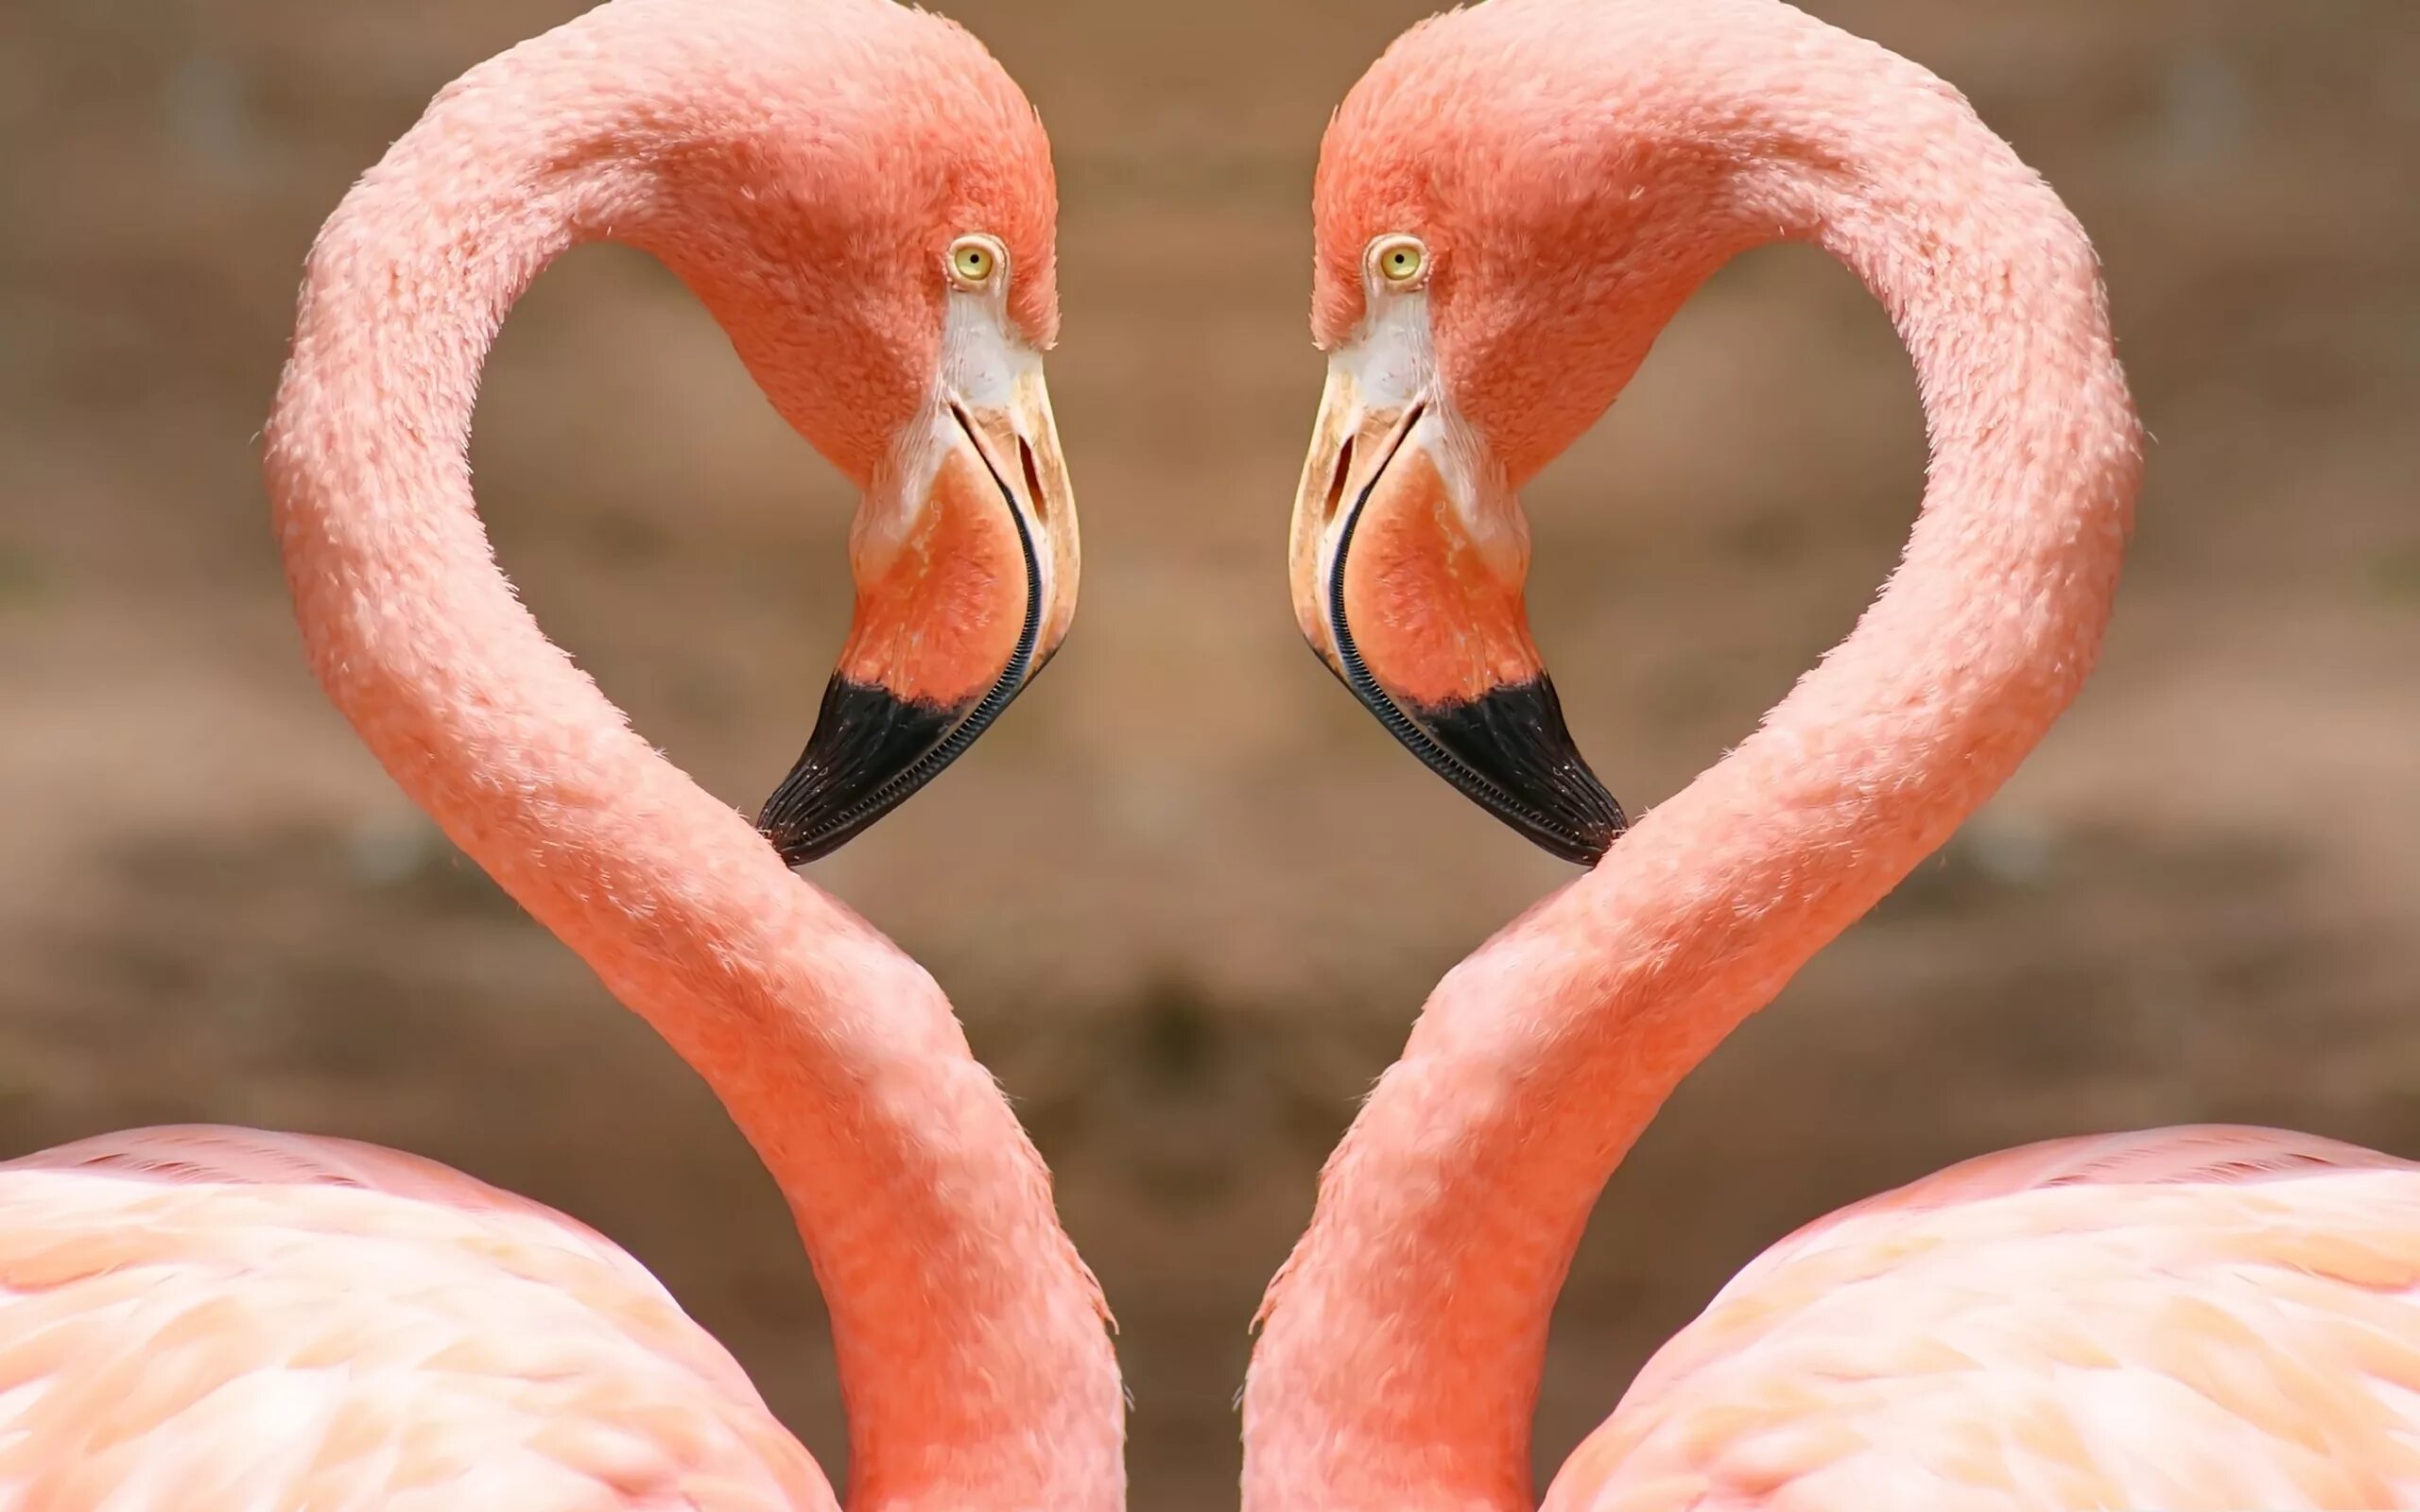 Африканский Фламинго. Обыкновенный Фламинго. Розовый Фламинго. Фламинго самец и самка. Фломинго